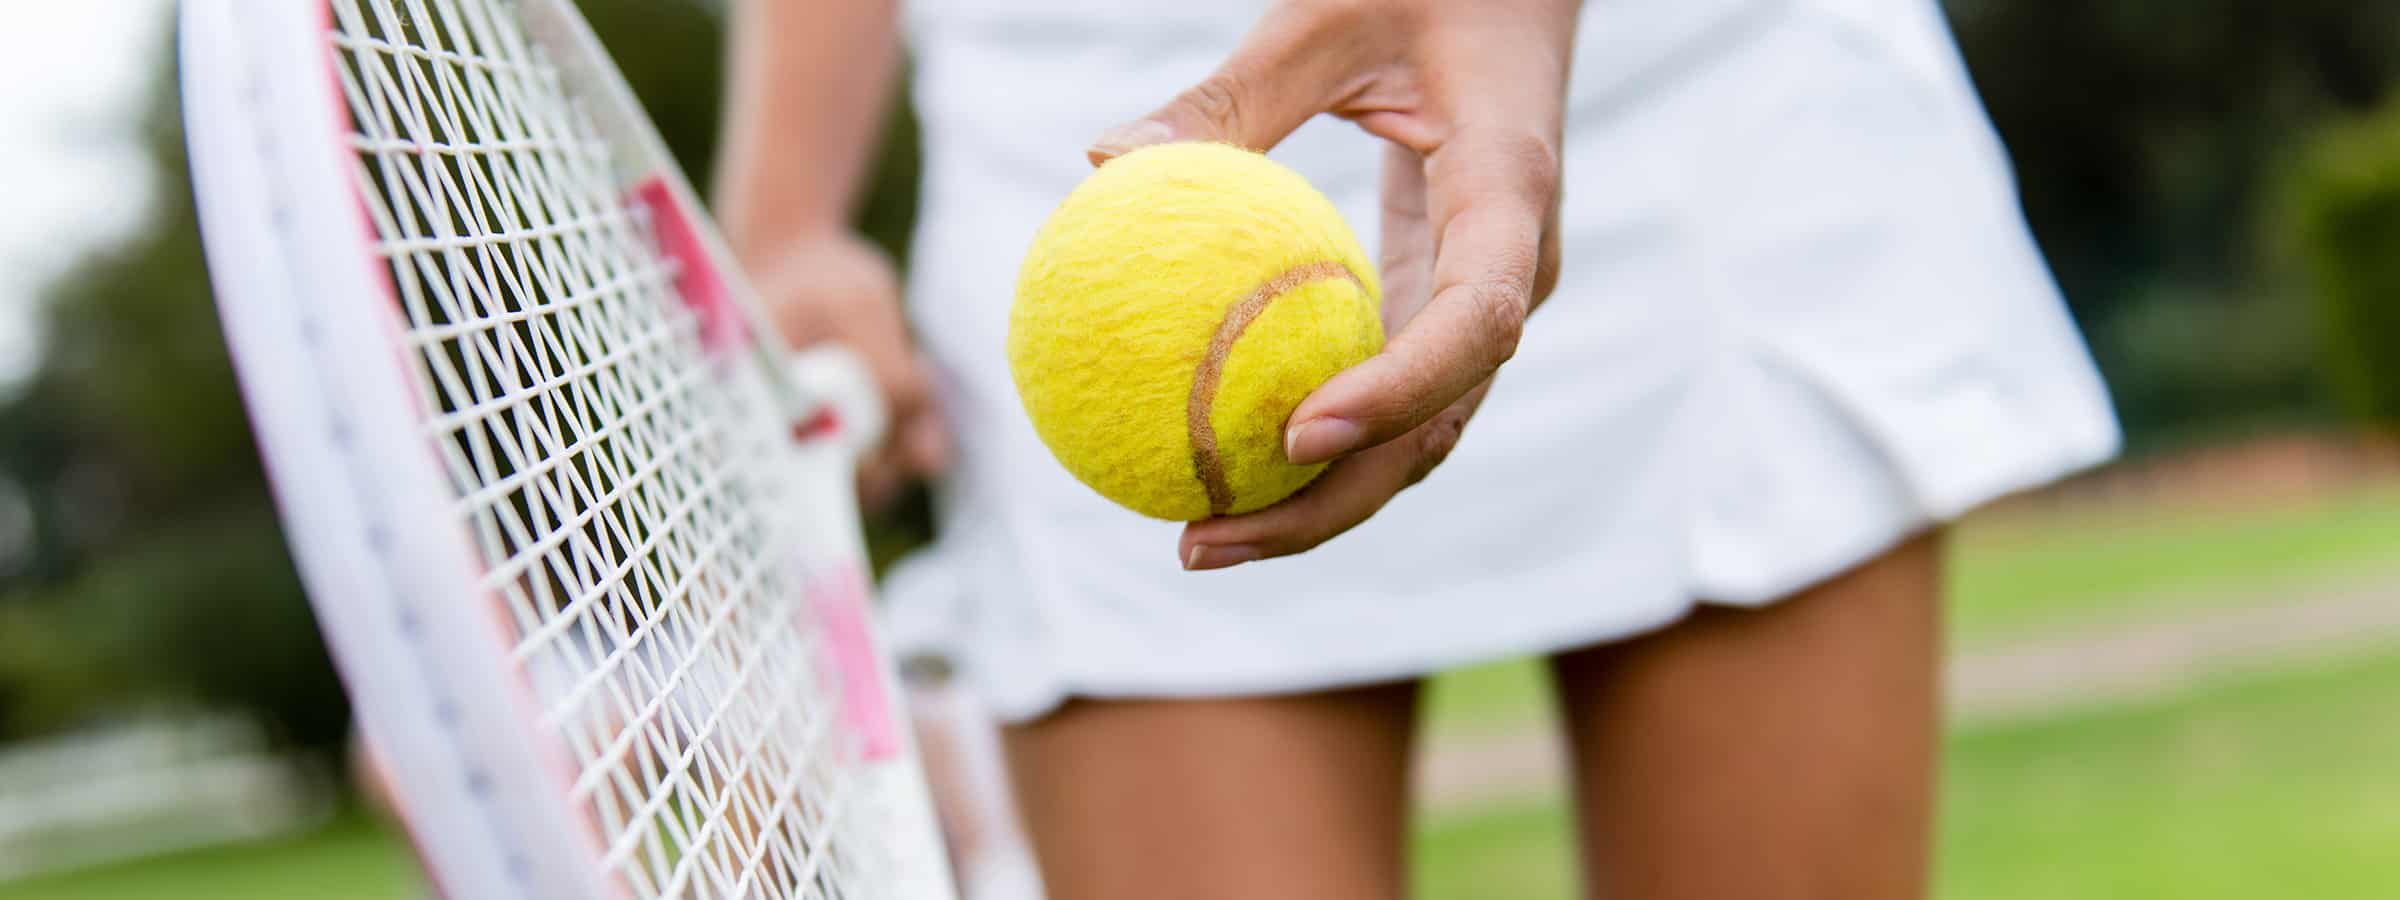 What is a Tiebreak & Super Tiebreak in Tennis? - Basha Tennis